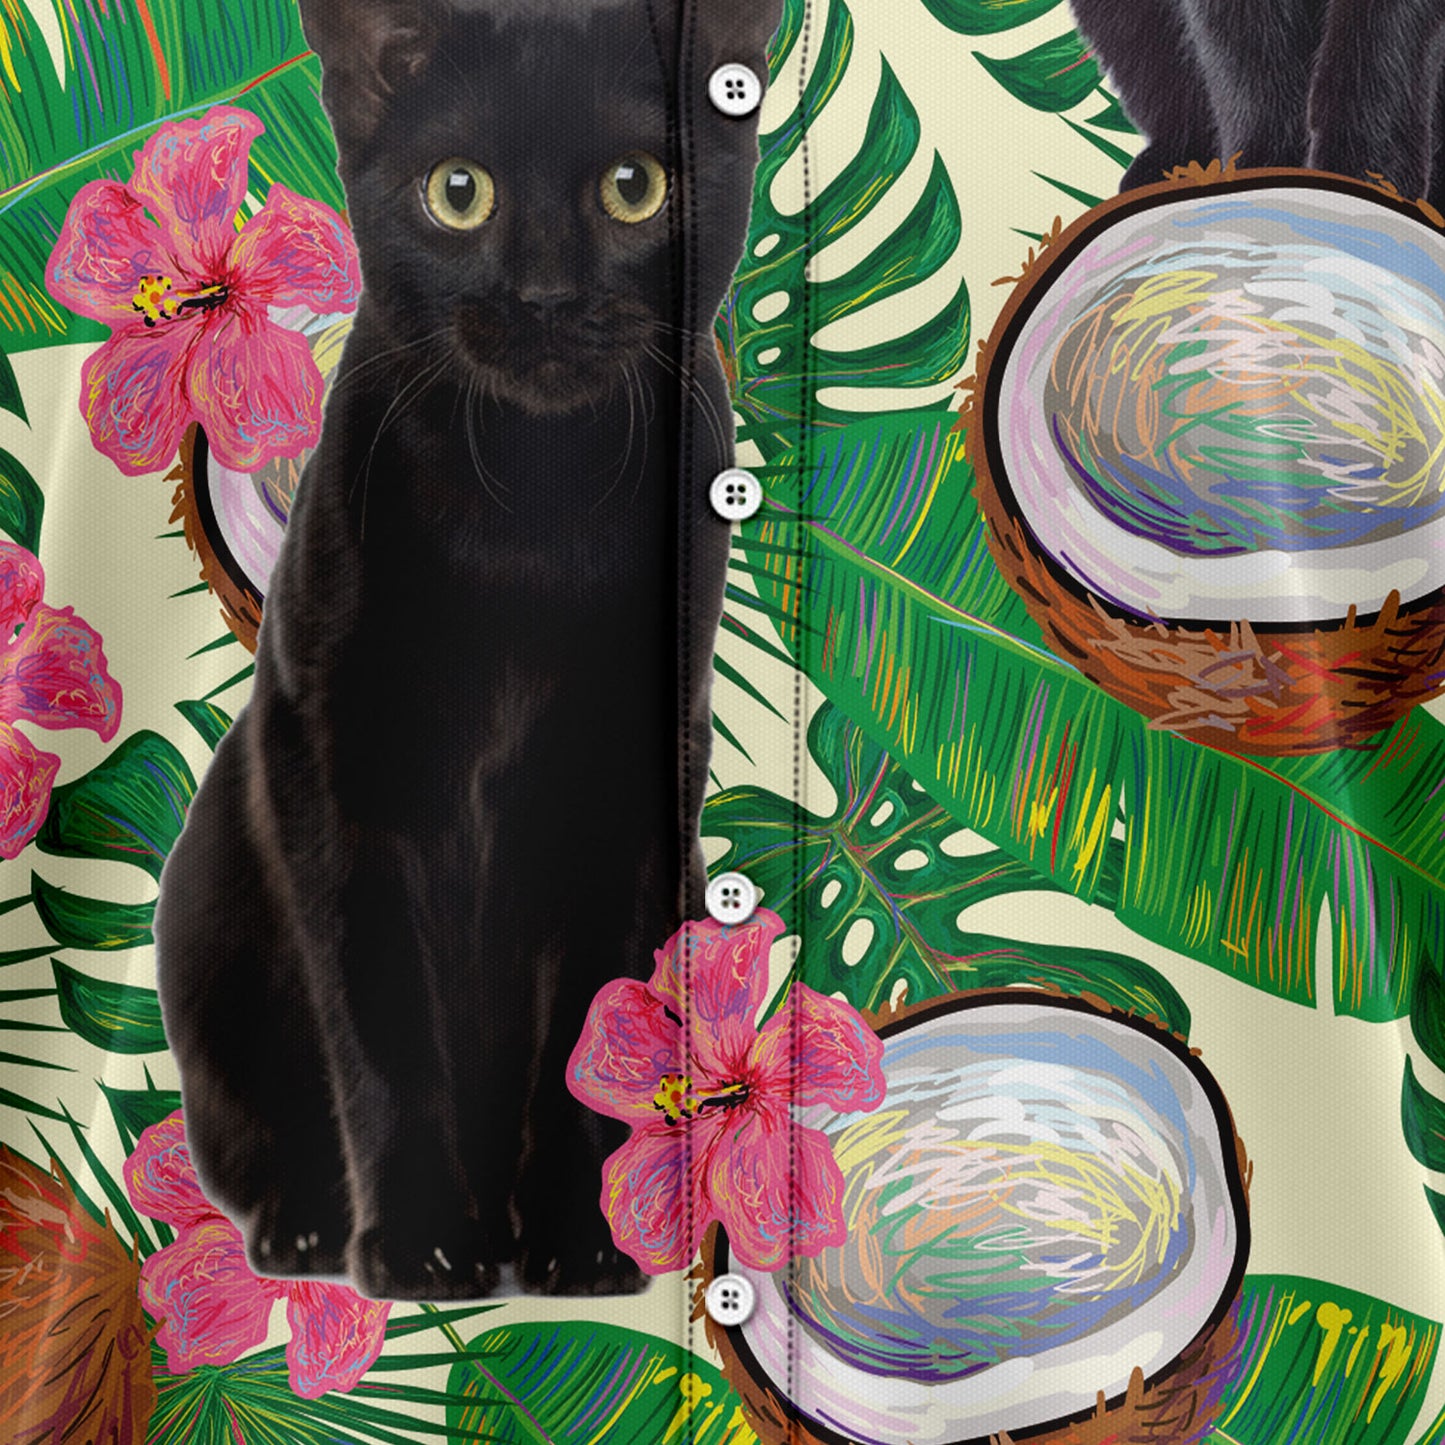 Black Cat Tropical Coconut G5728 Hawaiian Shirt